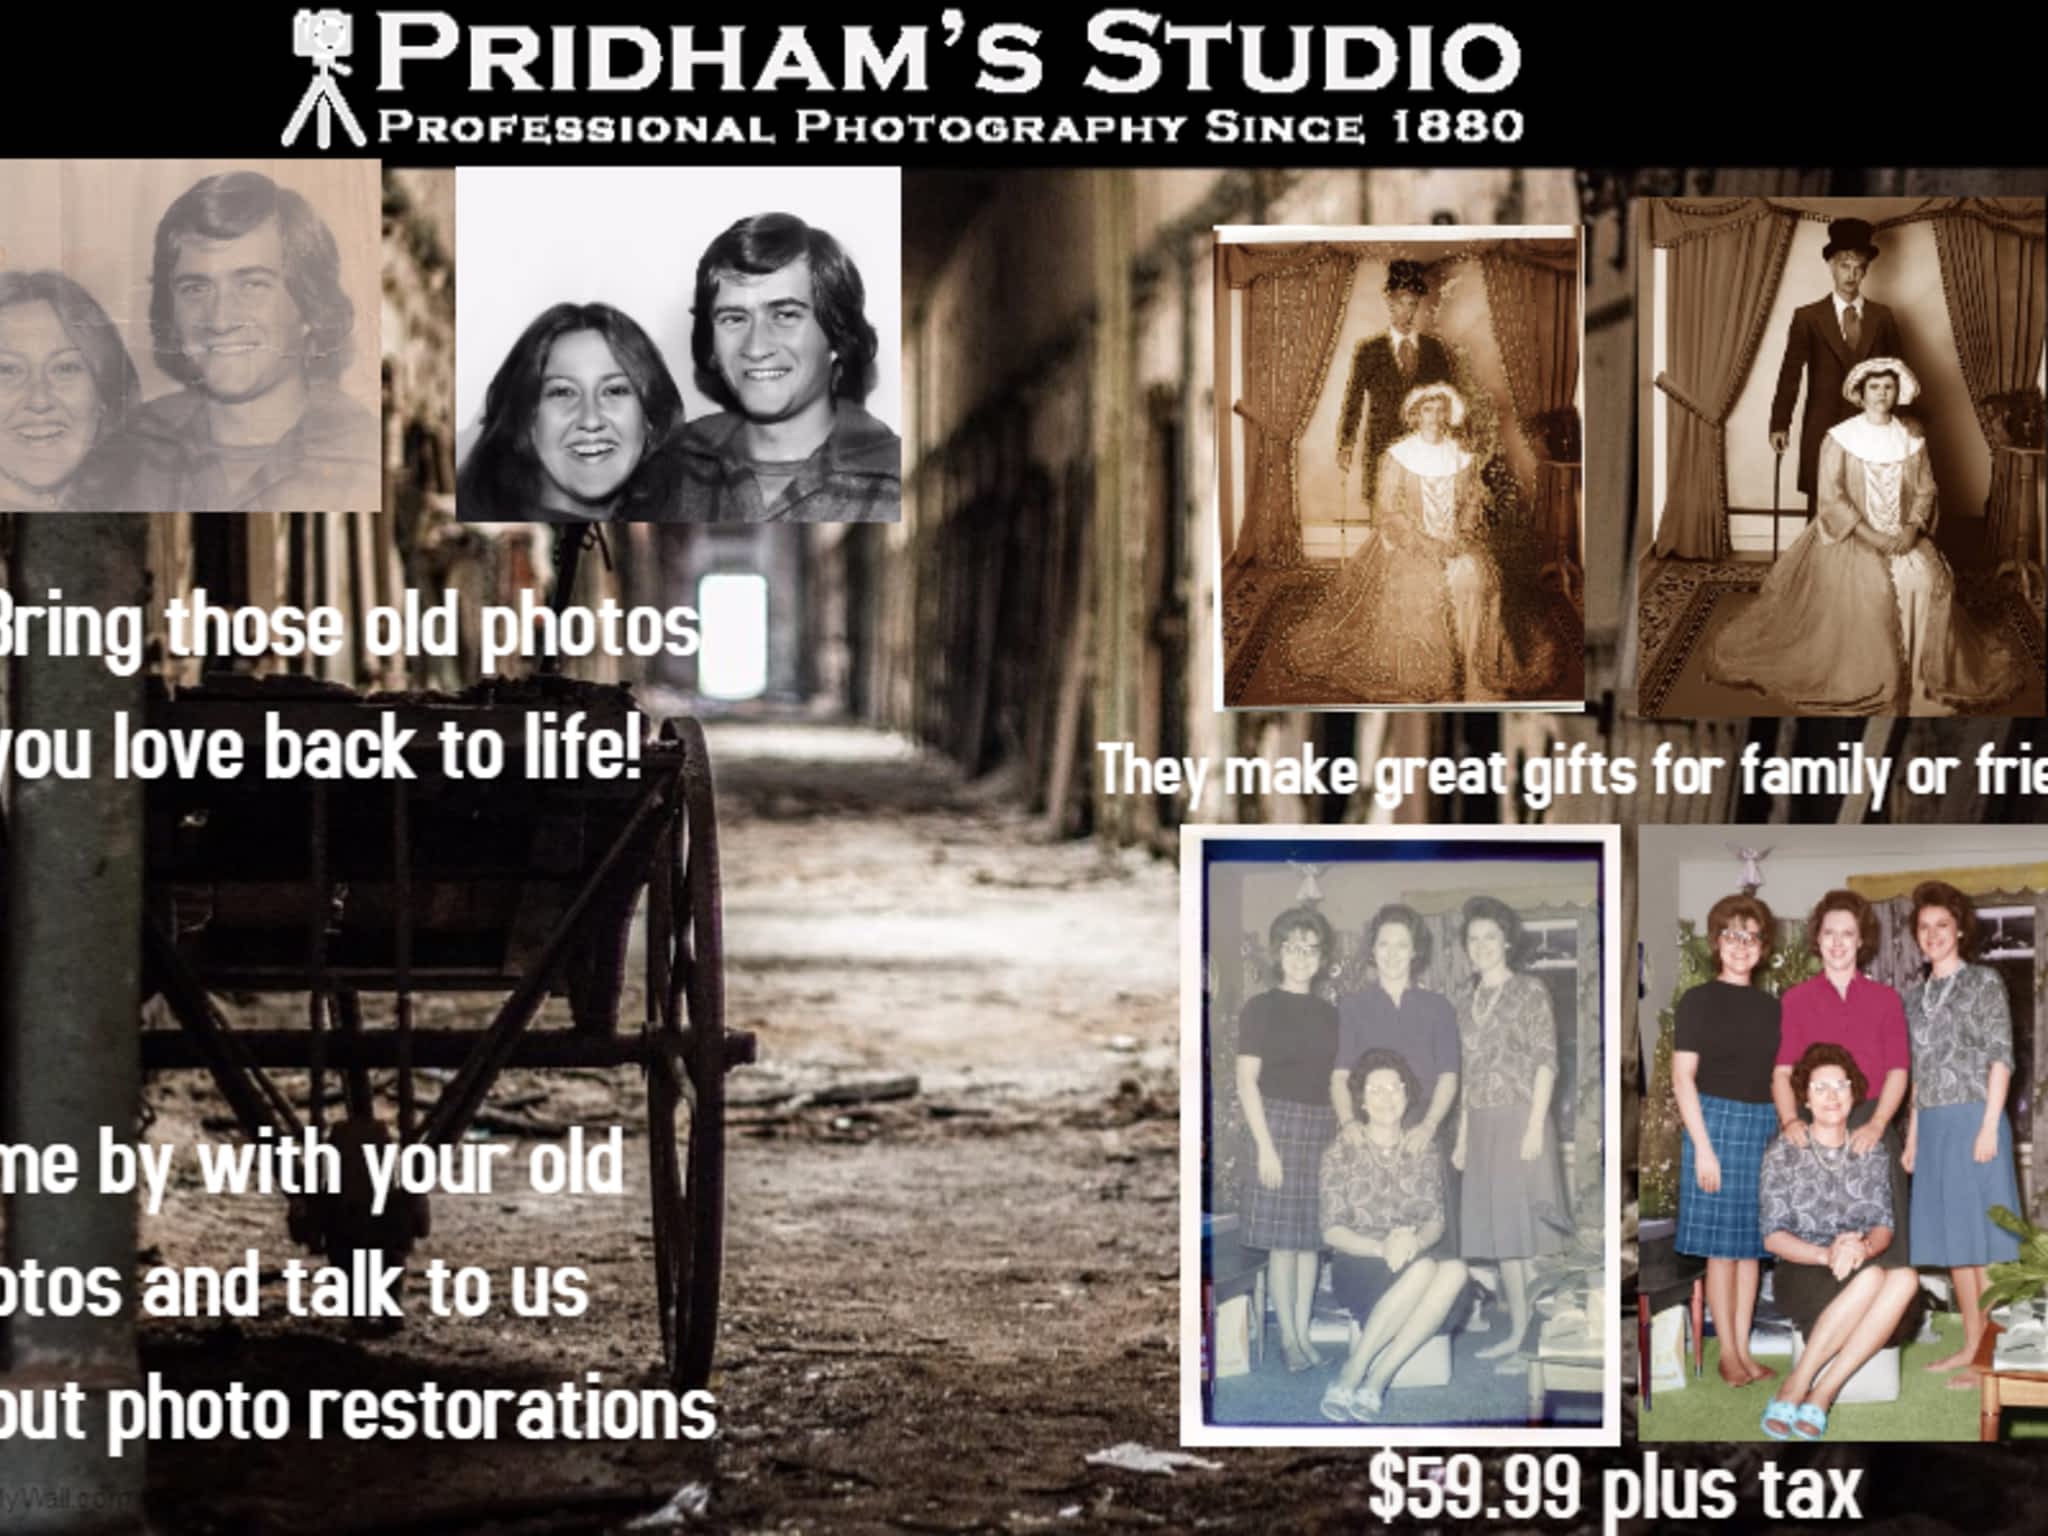 photo Pridham's Studio Ltd